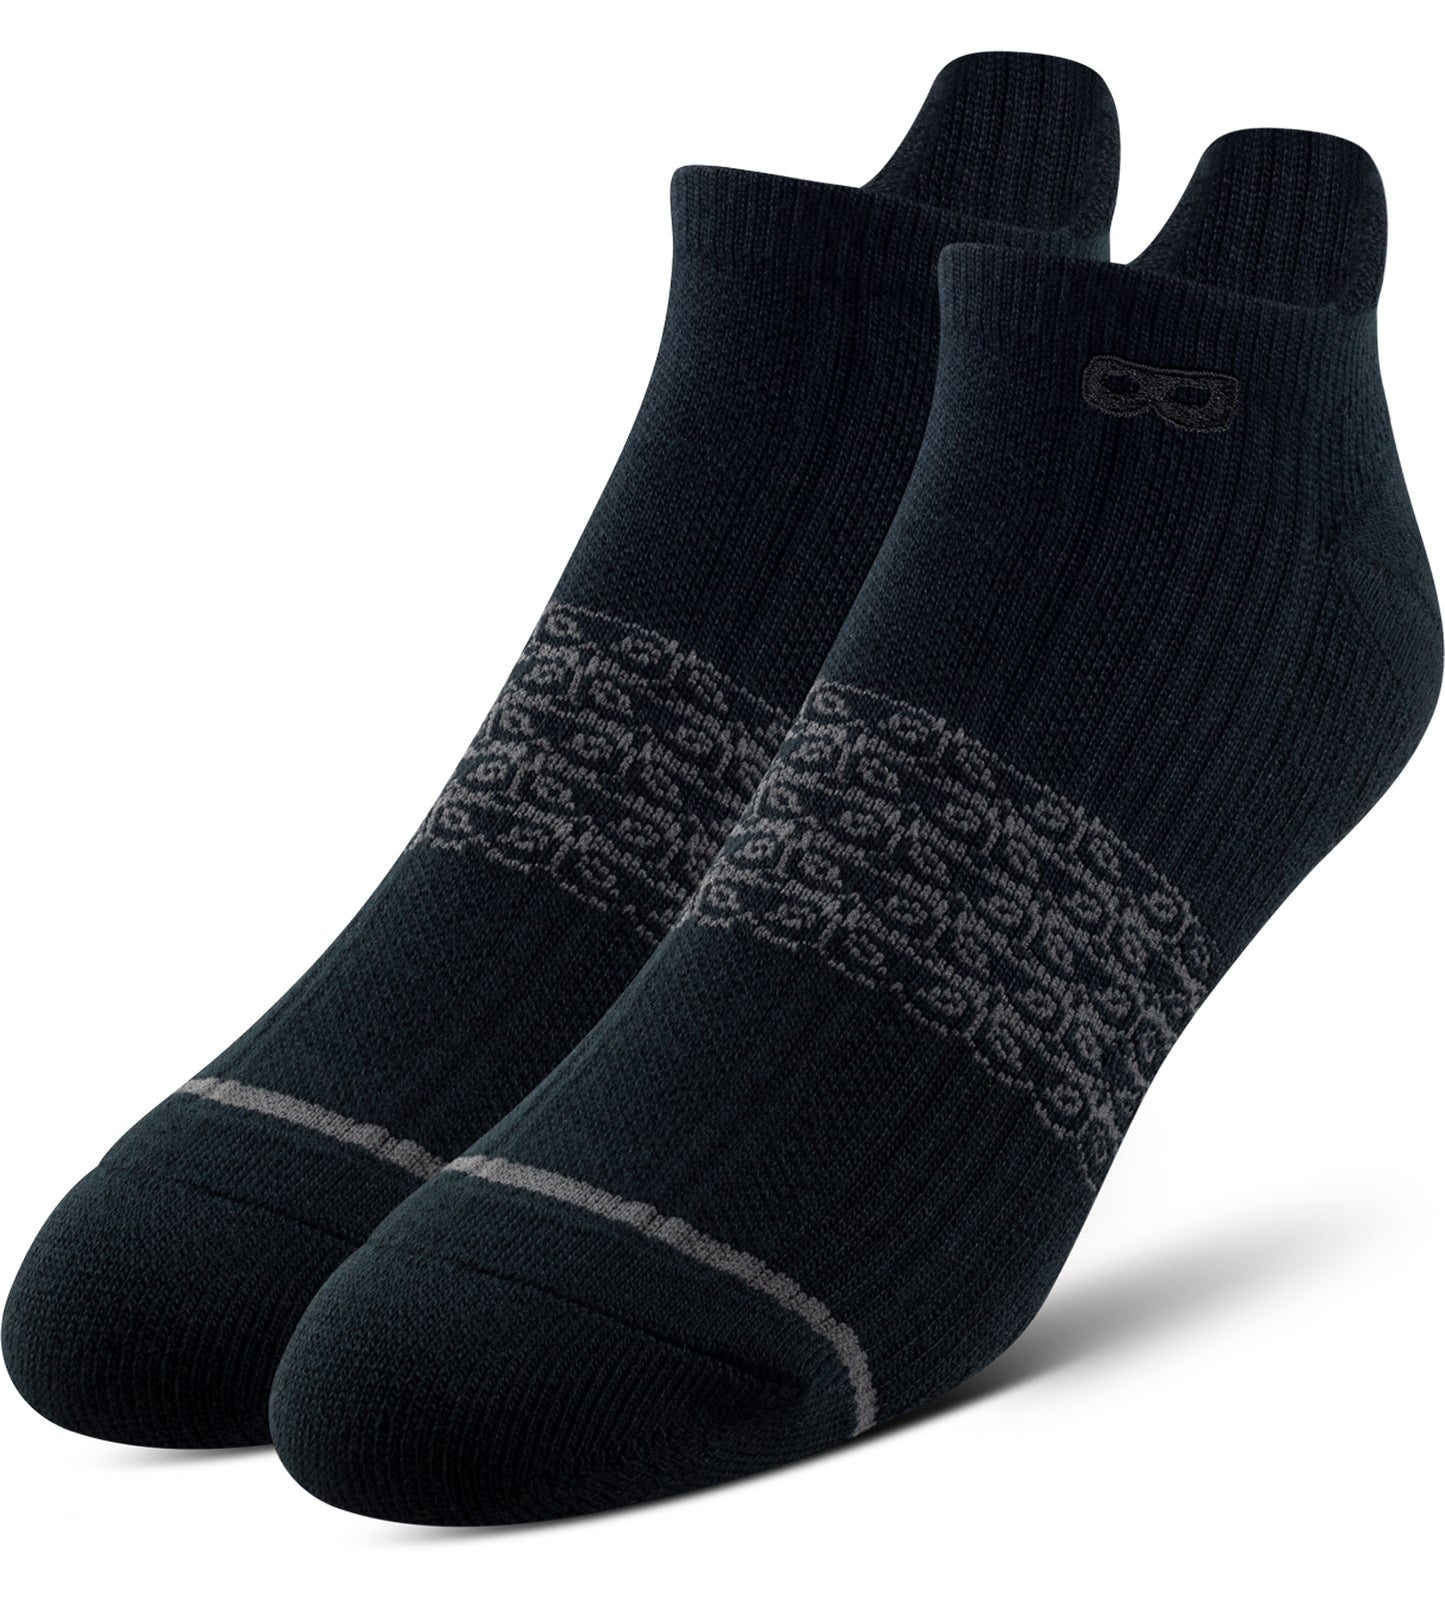 Men’s Cushion Low Cut Socks 6 Pack, black 